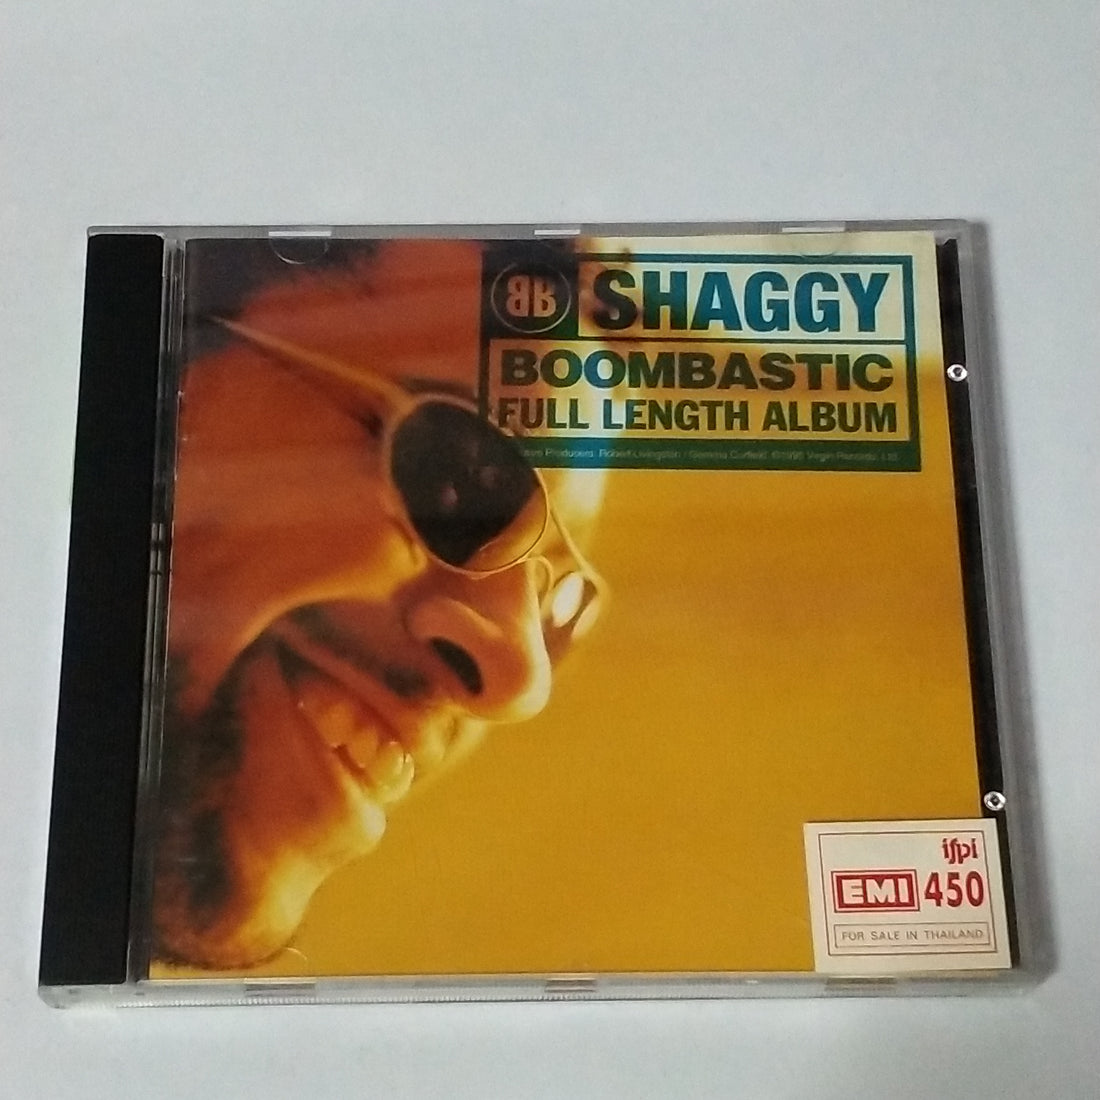 Shaggy - Boombastic (Full Length Album) (CD) (VG+)